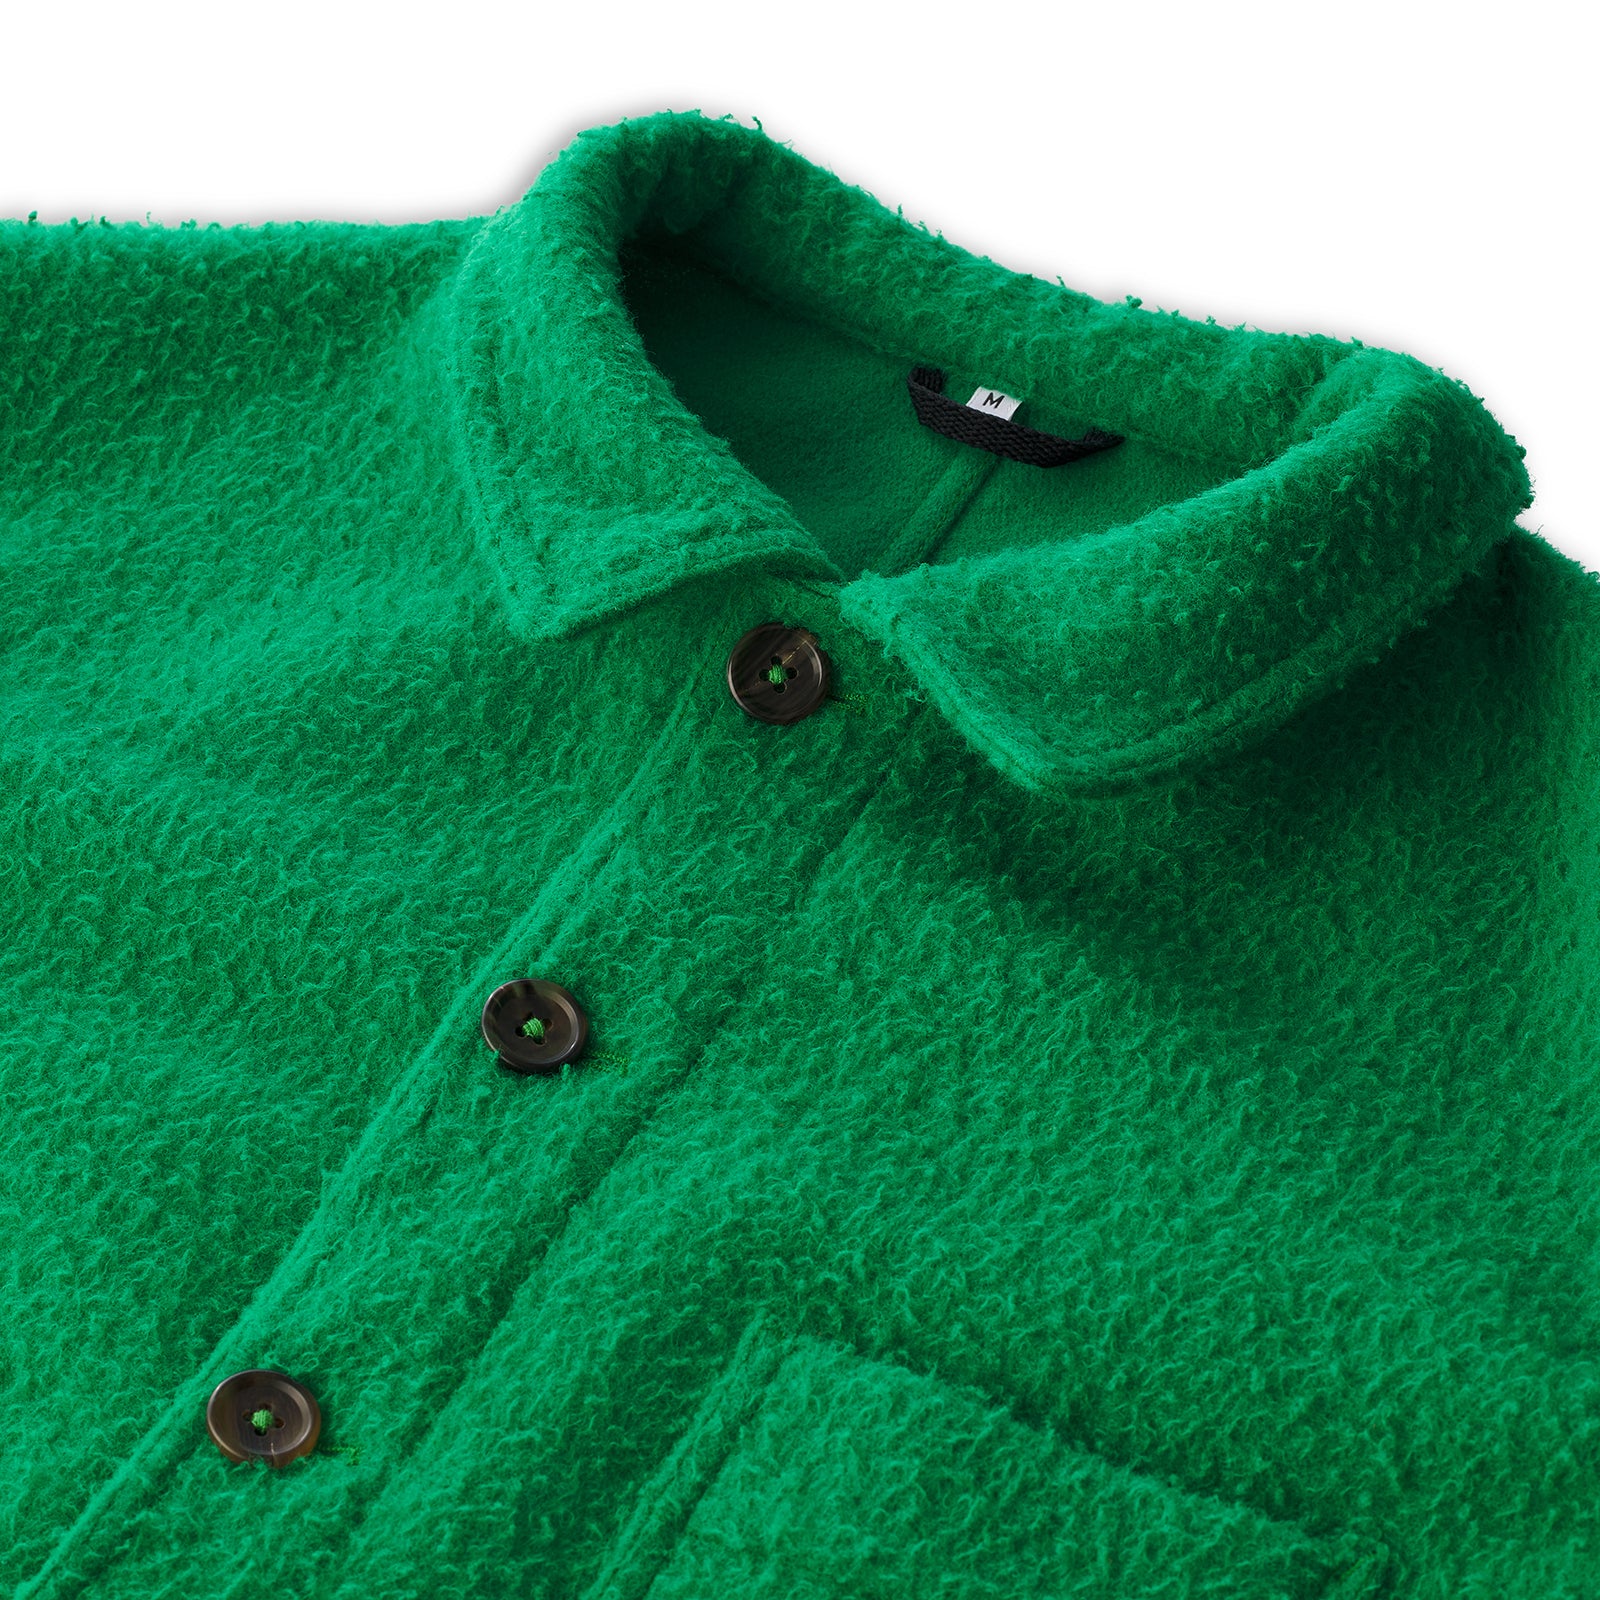 Florentine Green Casentino Utility Jacket